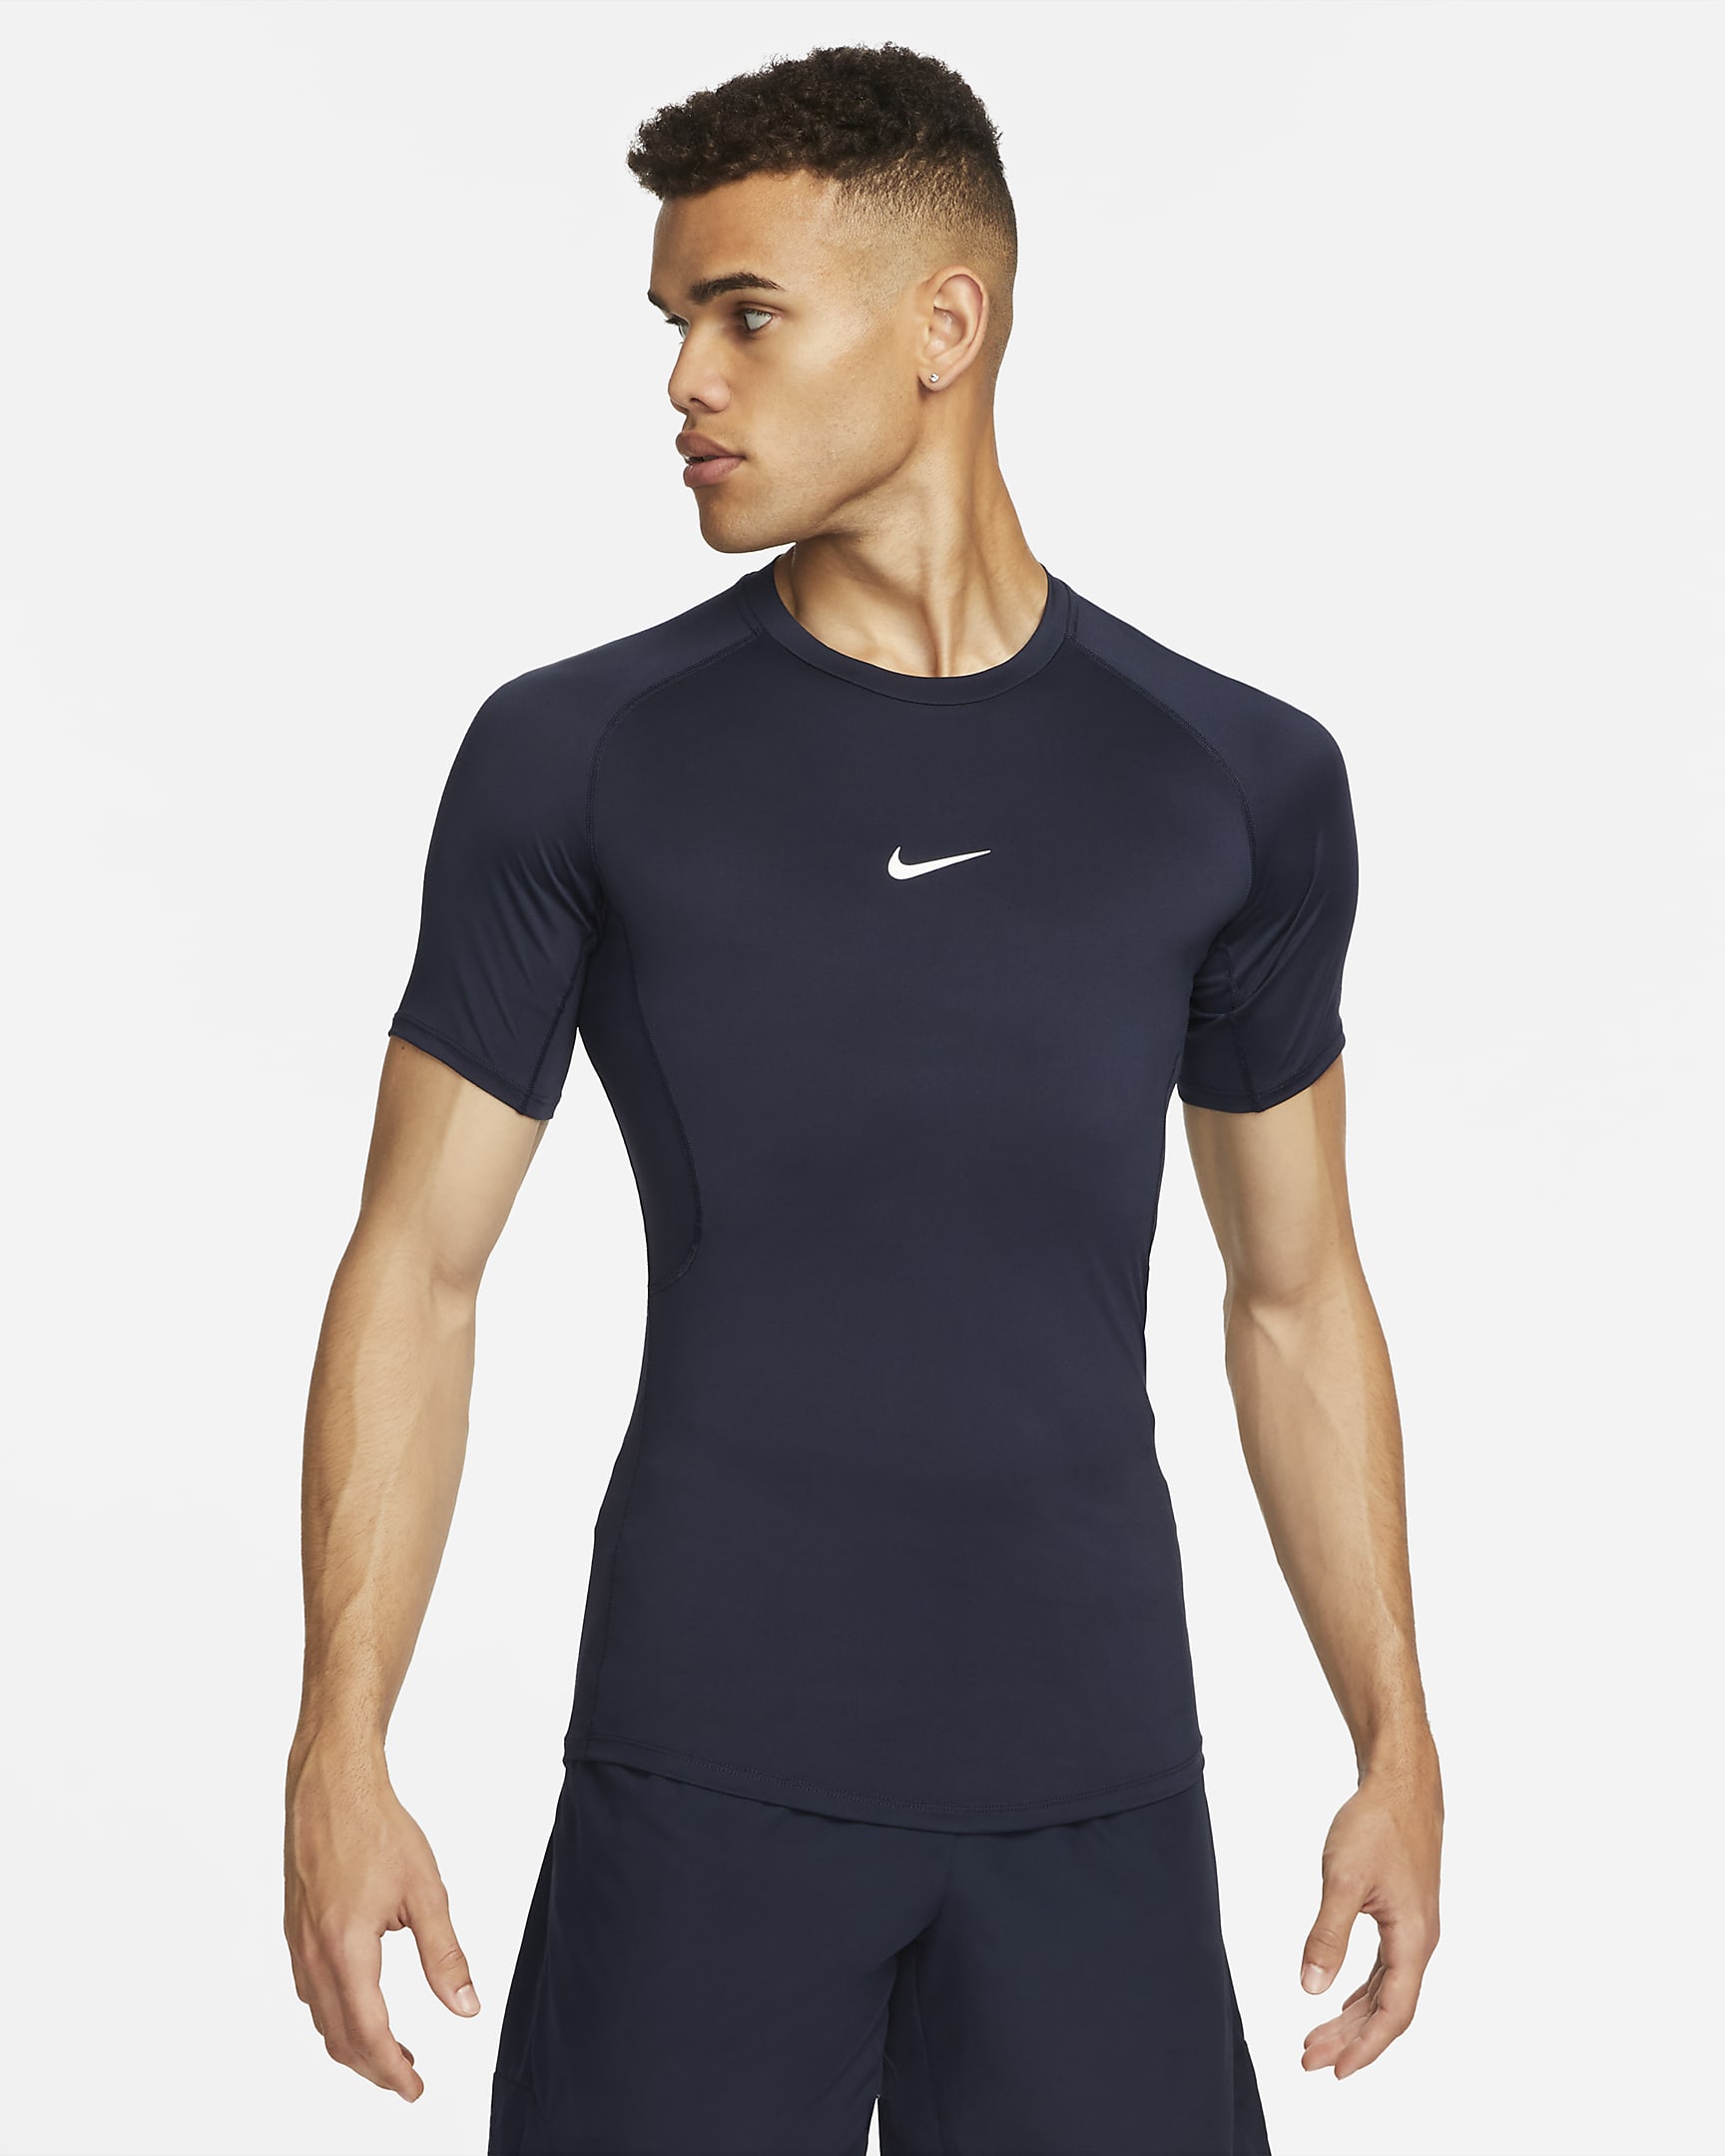 Nike Pro Men's Dri-FIT Tight Short-Sleeve Fitness Top - Obsidian/White